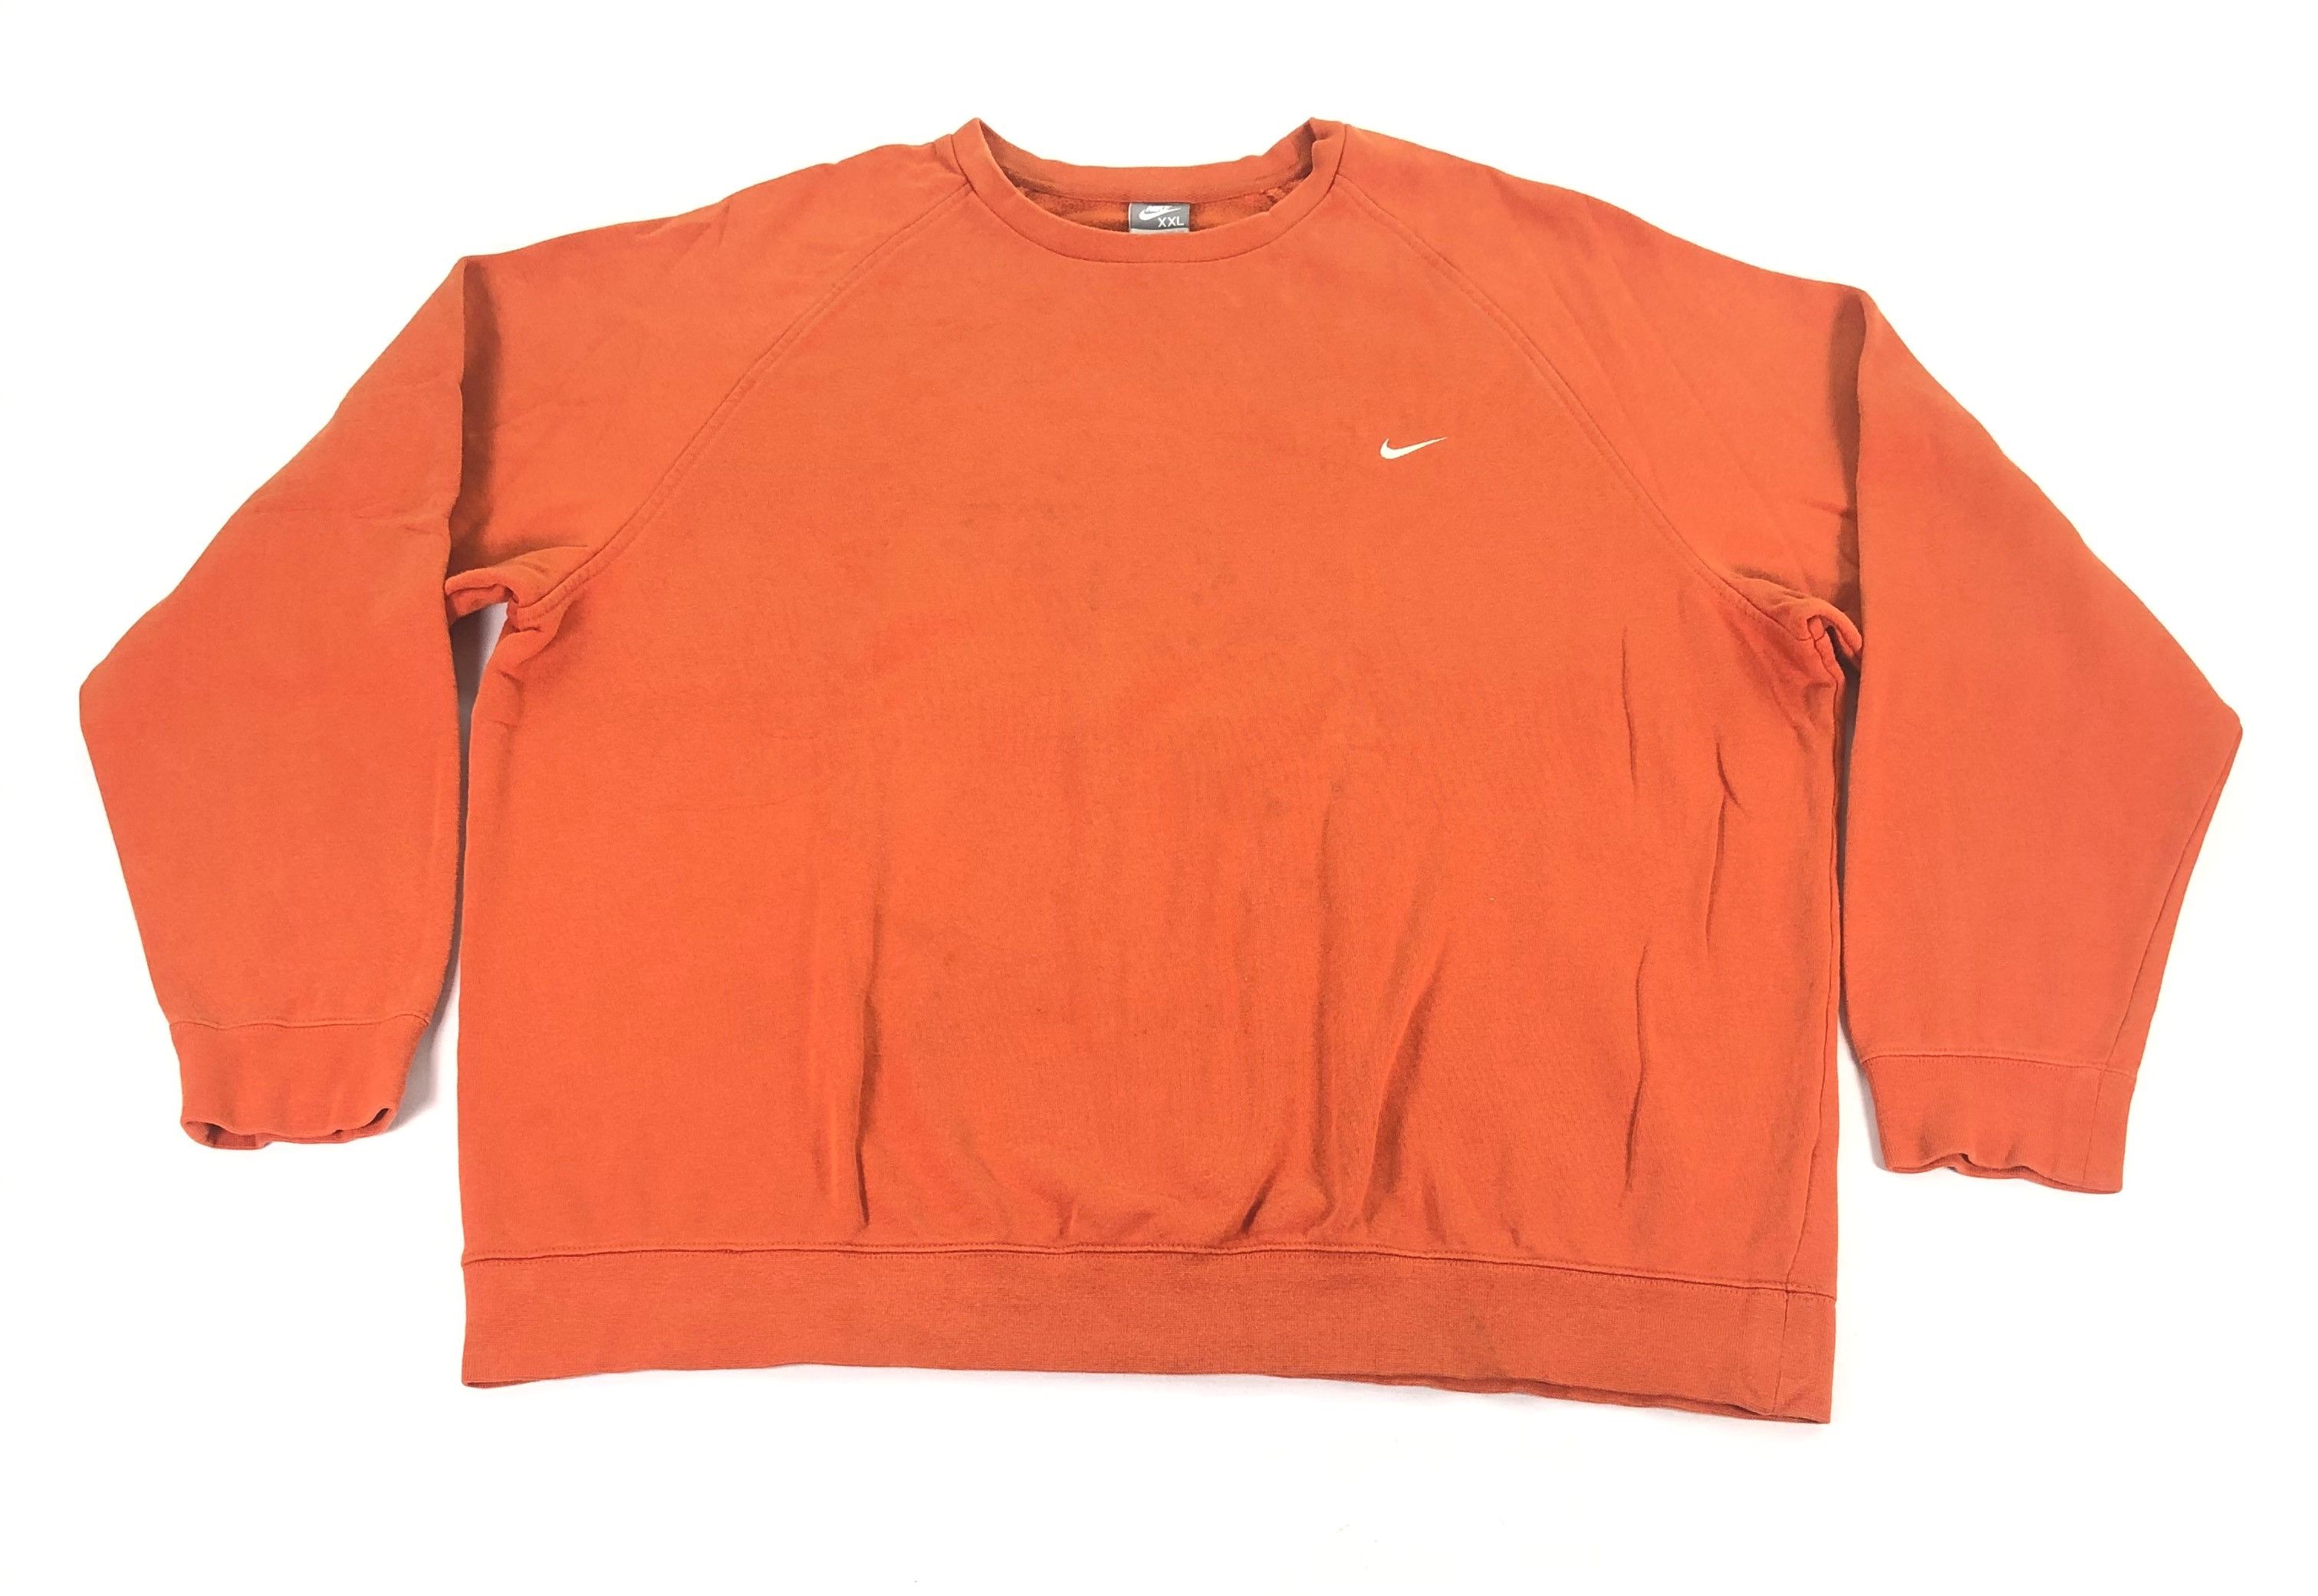 Nike Nike Sweatshirt Logo Pull Over Orange Colour Size US XXL / EU 58 / 5 - 1 Preview